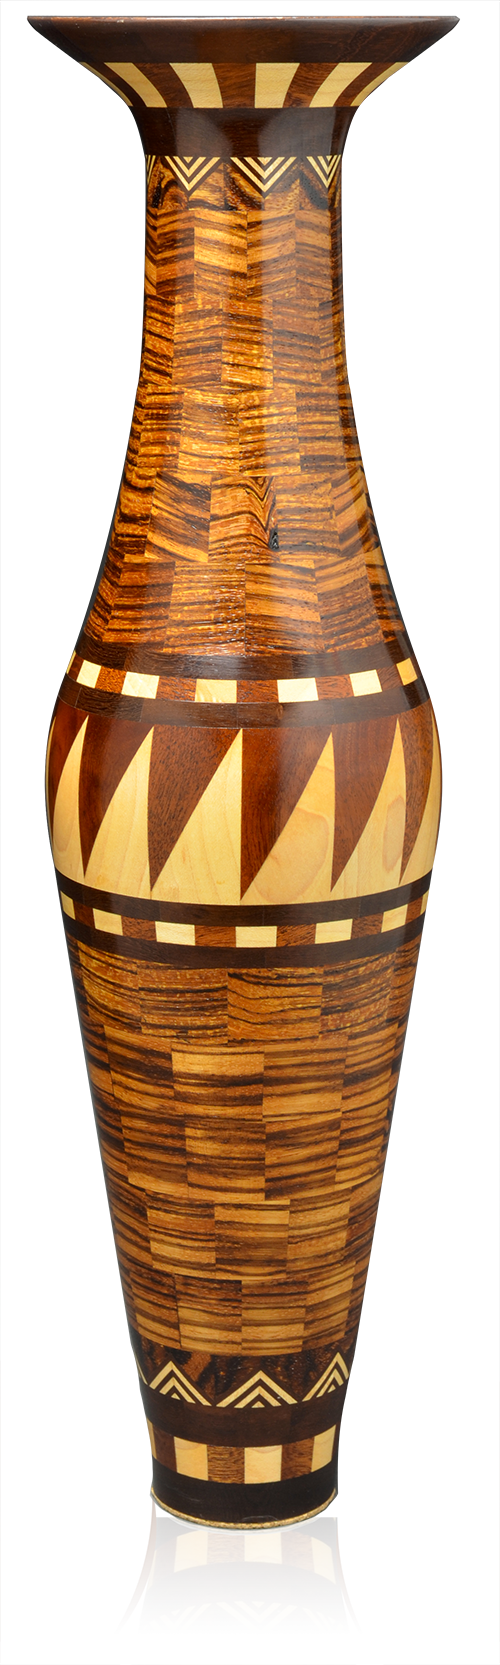 Wooden vase built by Fiaschetti Woodworking.